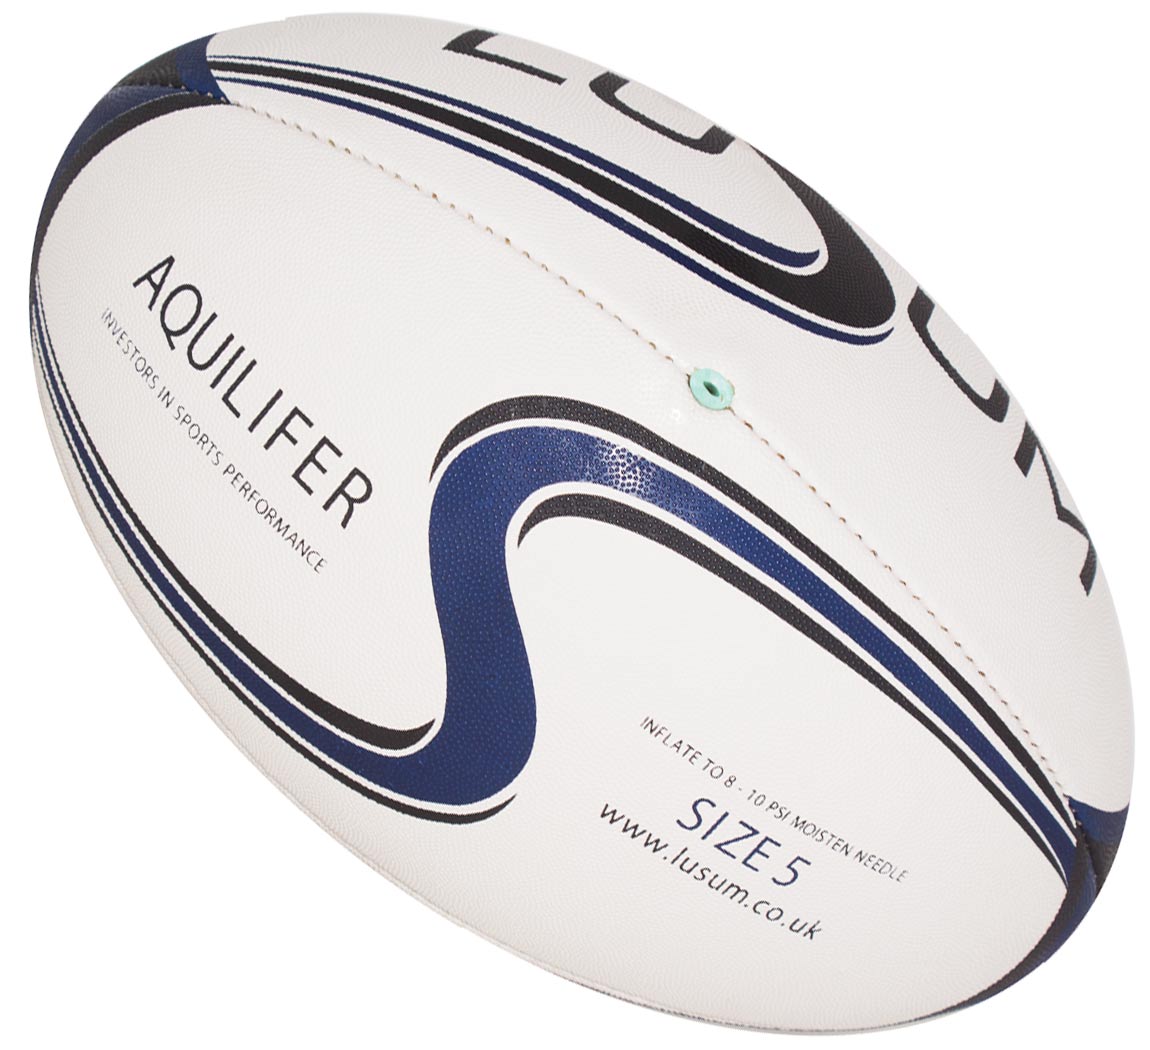 Lusum Aquilifer Match Rugby Ball 3 Ball Pack 